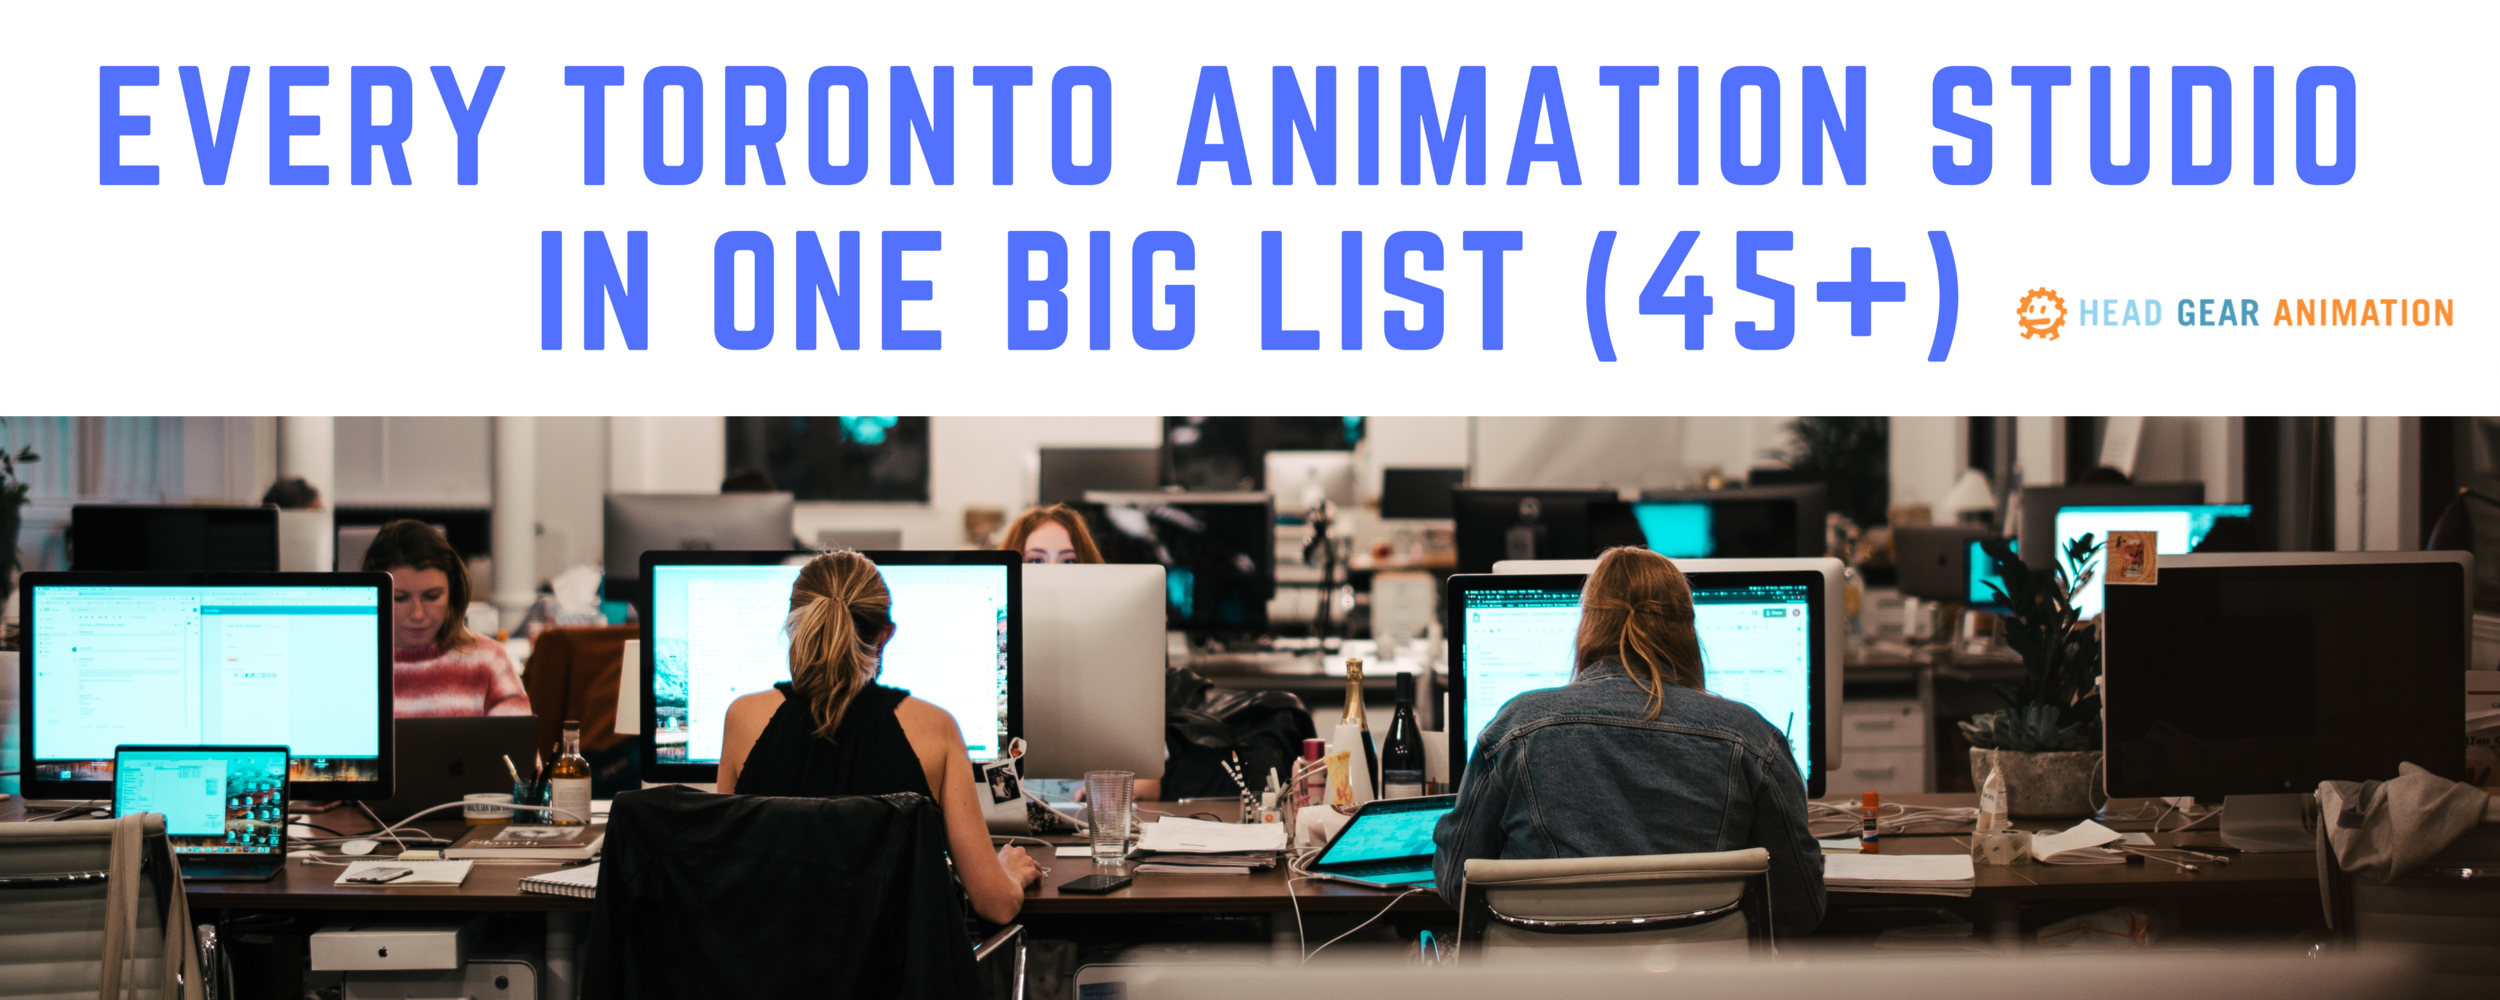 Head Gear Animation | Every Toronto Animation Studio in One Big List (45+)